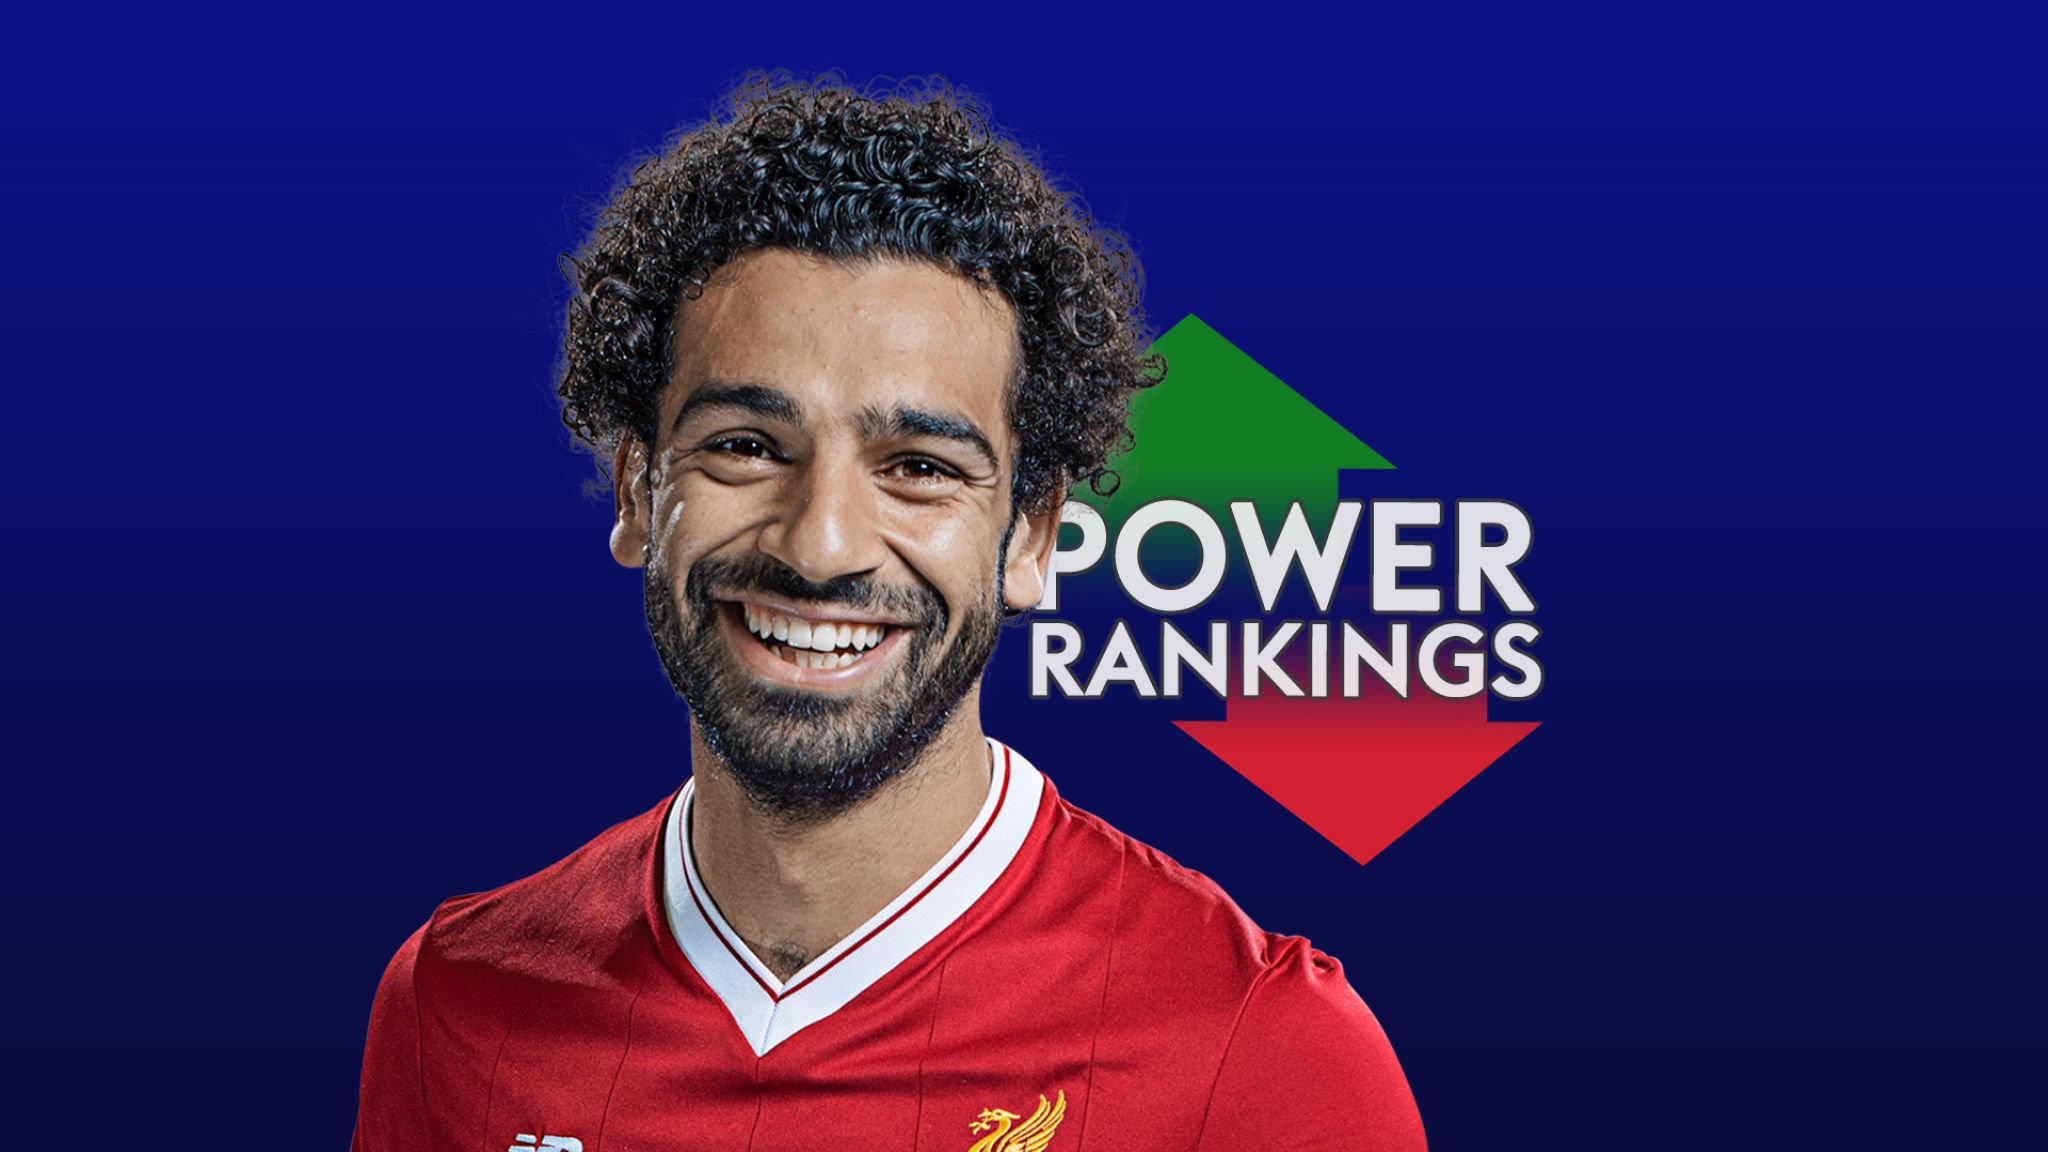 Liverpool's Mohamed Salah tops the Sky Sports Power Rankings